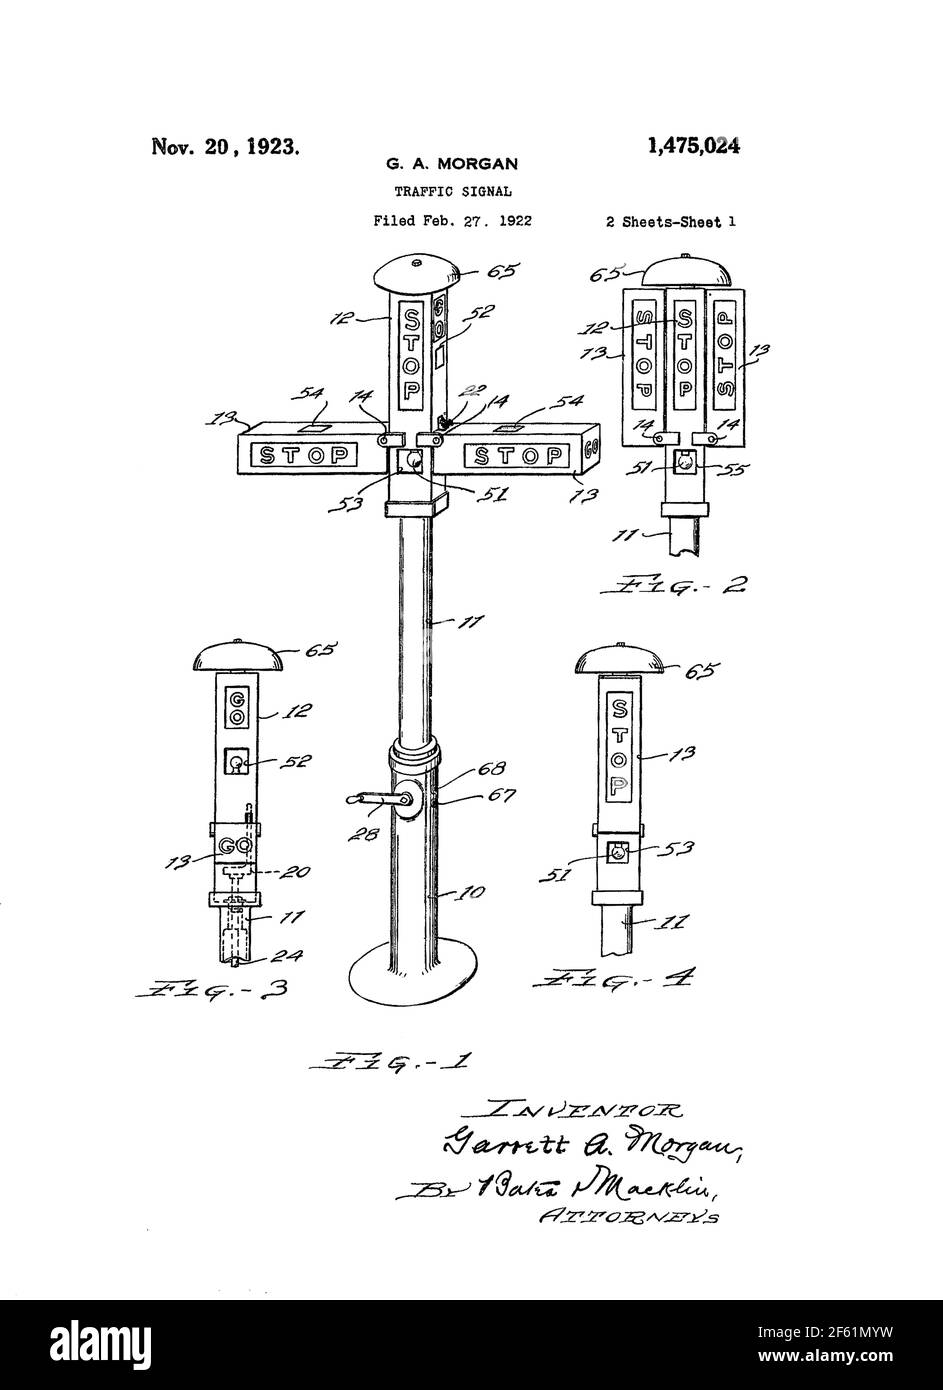 Garrett Morgan, Traffic Signal Patent Stock Photo